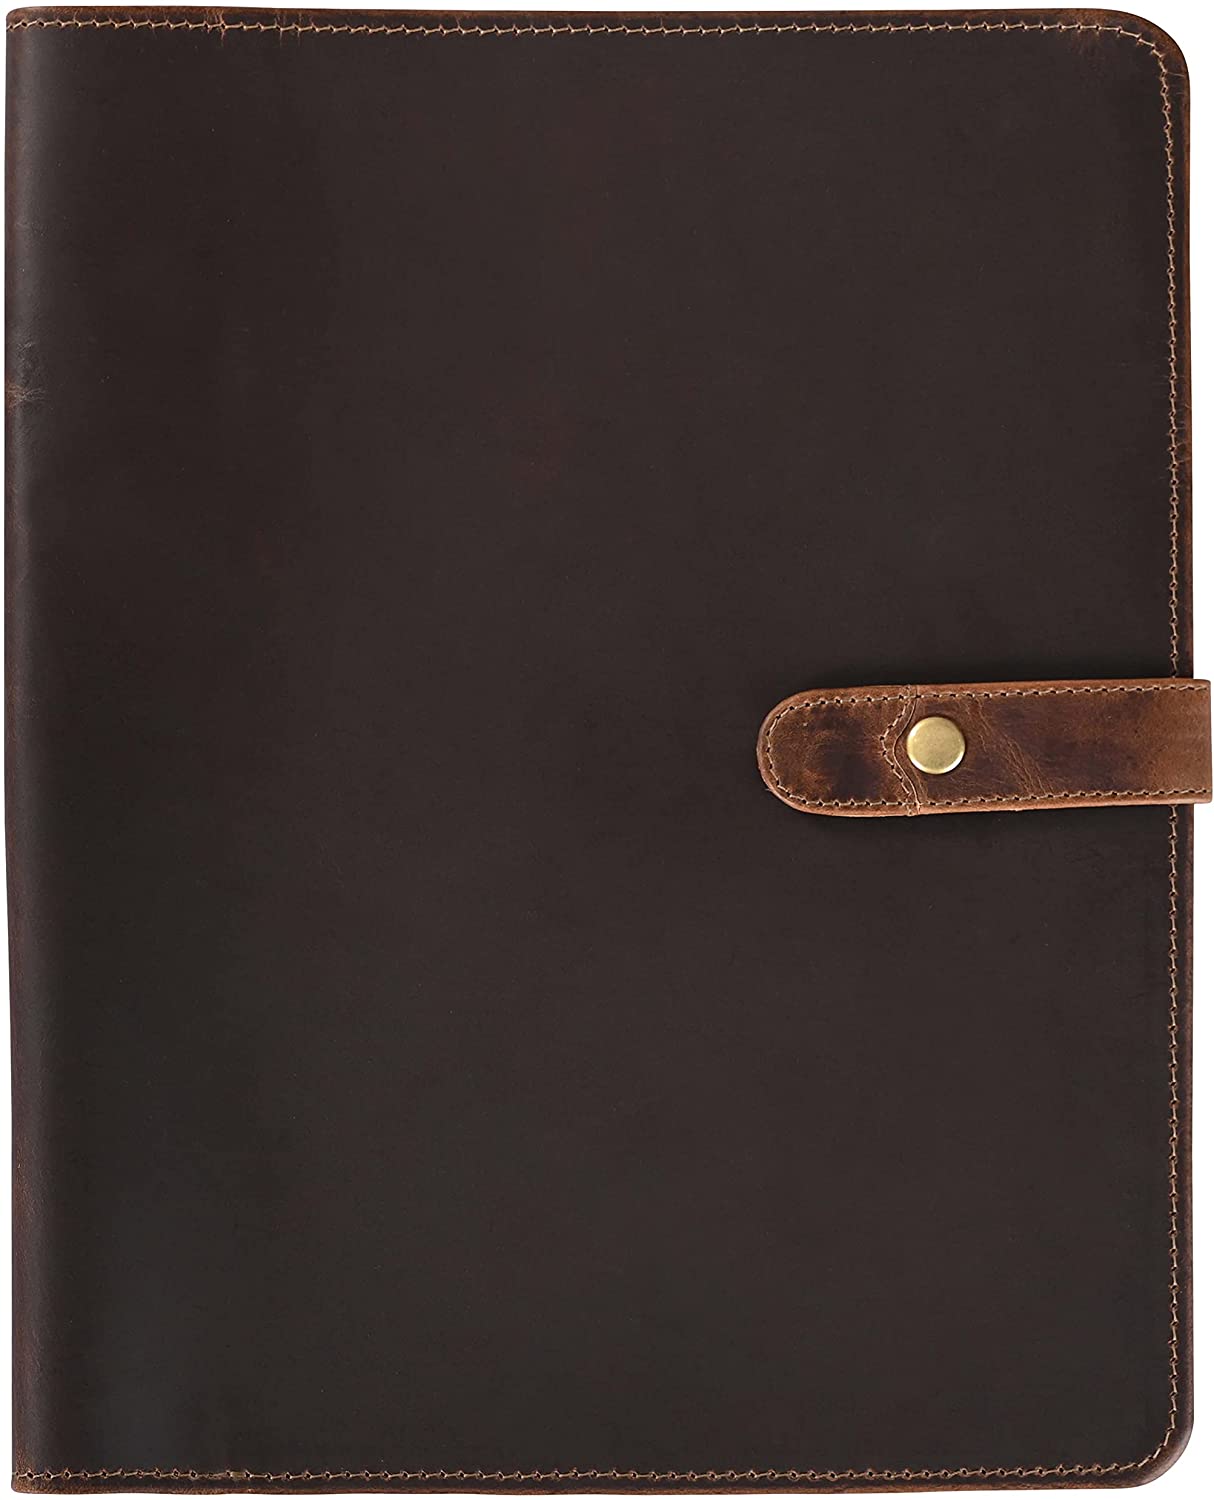 Leather Notebook Cover - Teak (XXXL Portfolio)